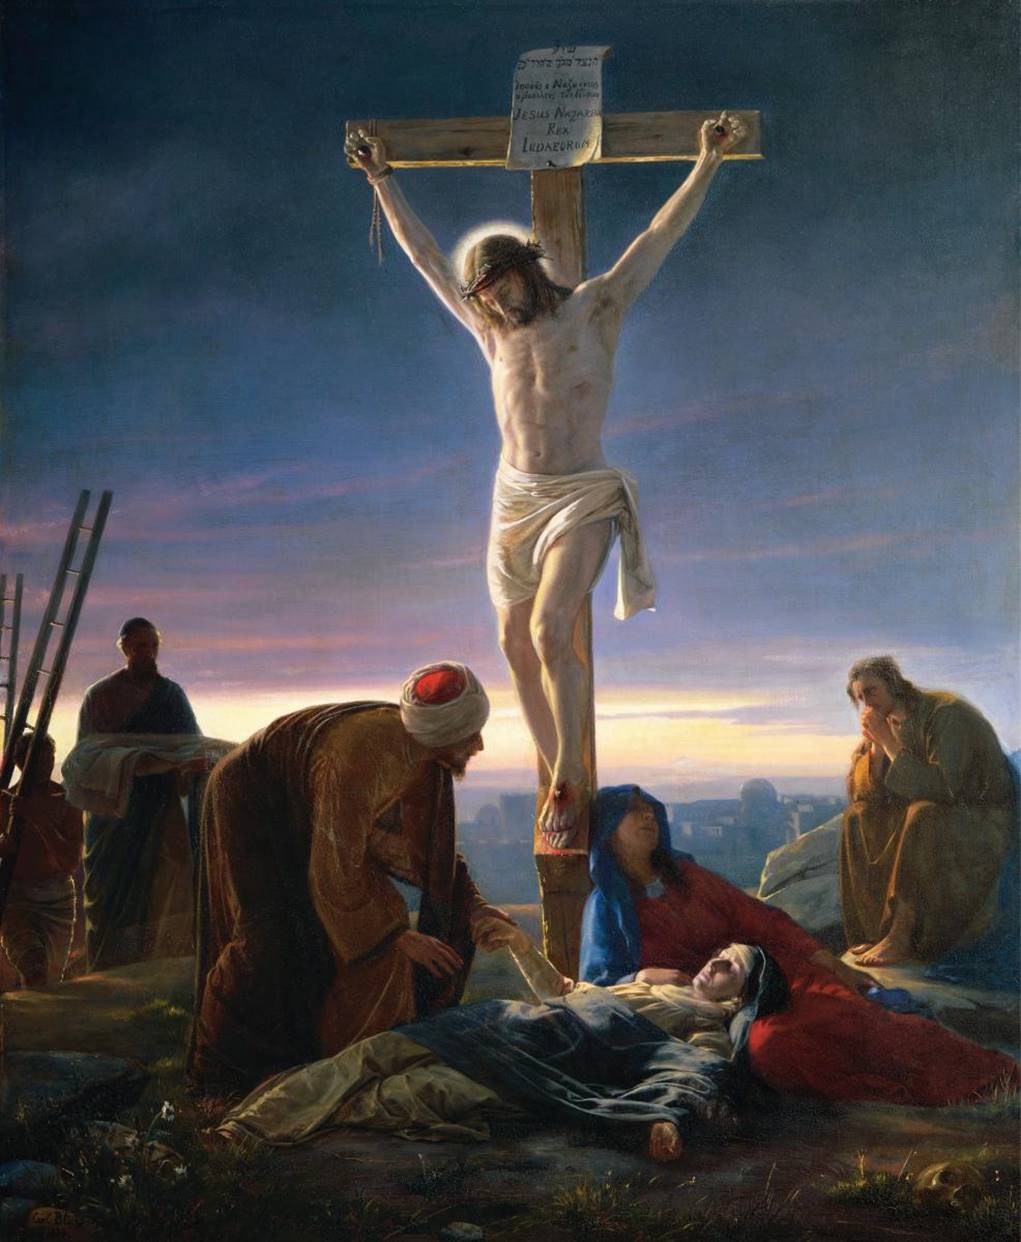 Crucifixion - Wikipedia